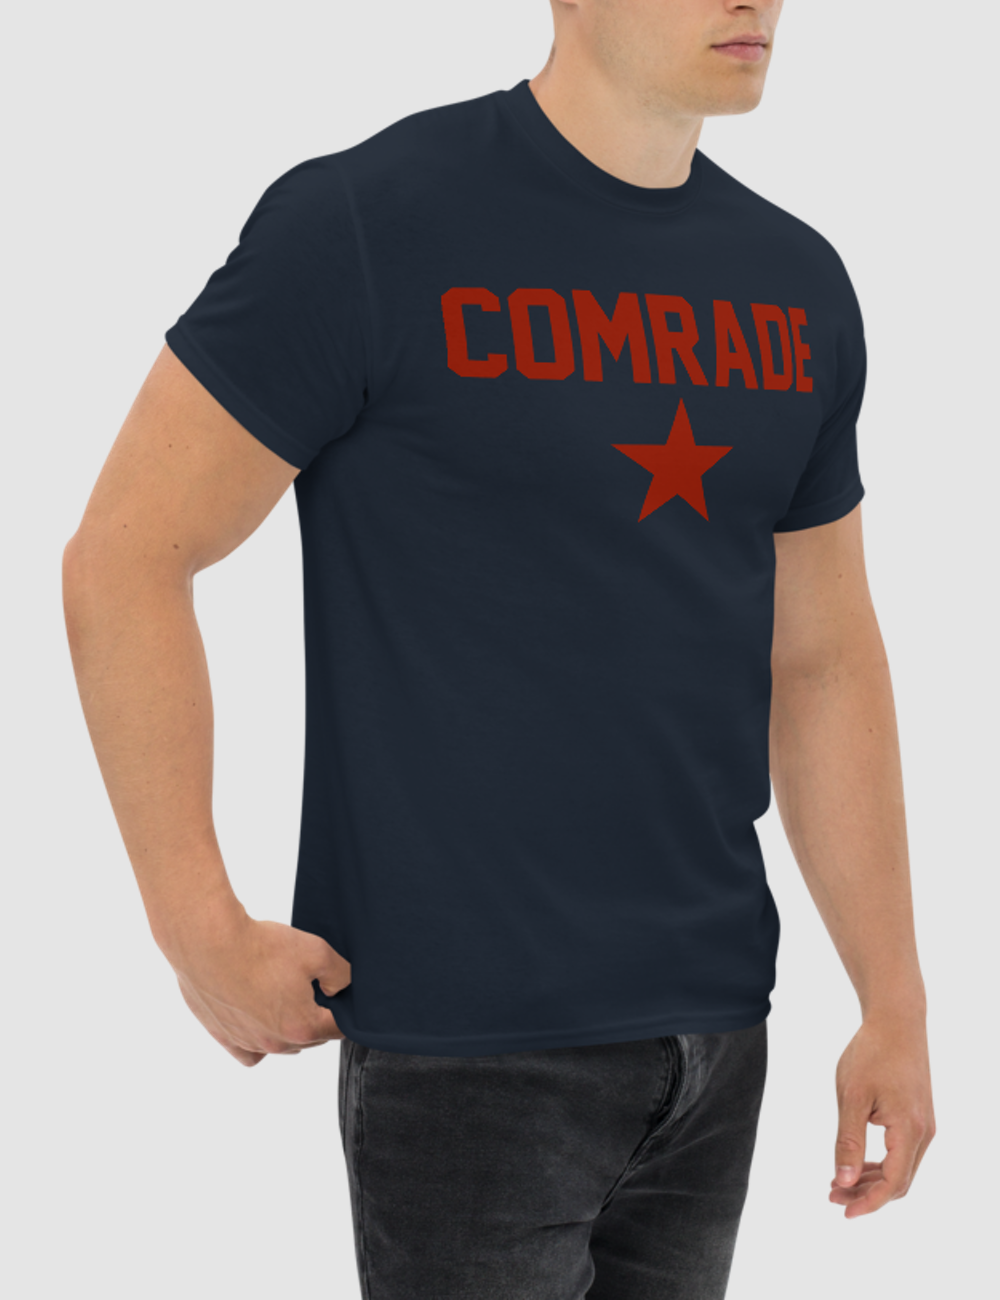 Comrade | T-Shirt OniTakai